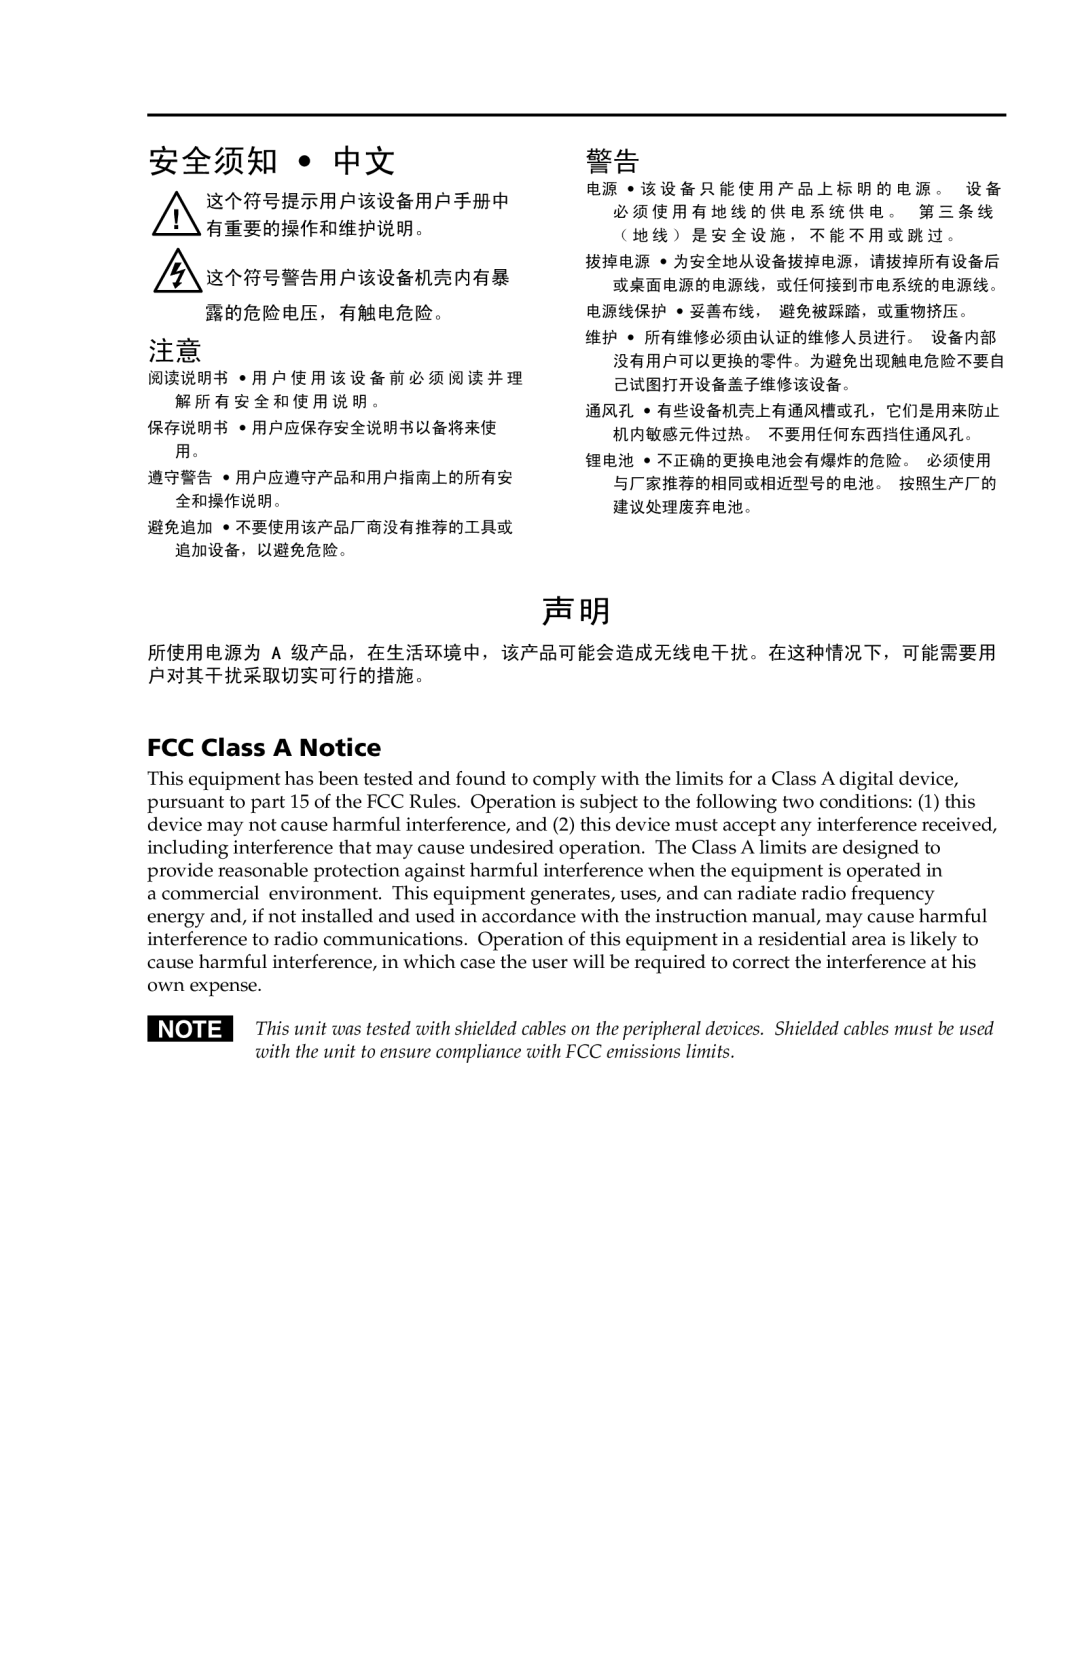 Extron electronic P/2 DA12 Series, P/2 DA8 user manual FCC Class A Notice, 安全须知 中文 